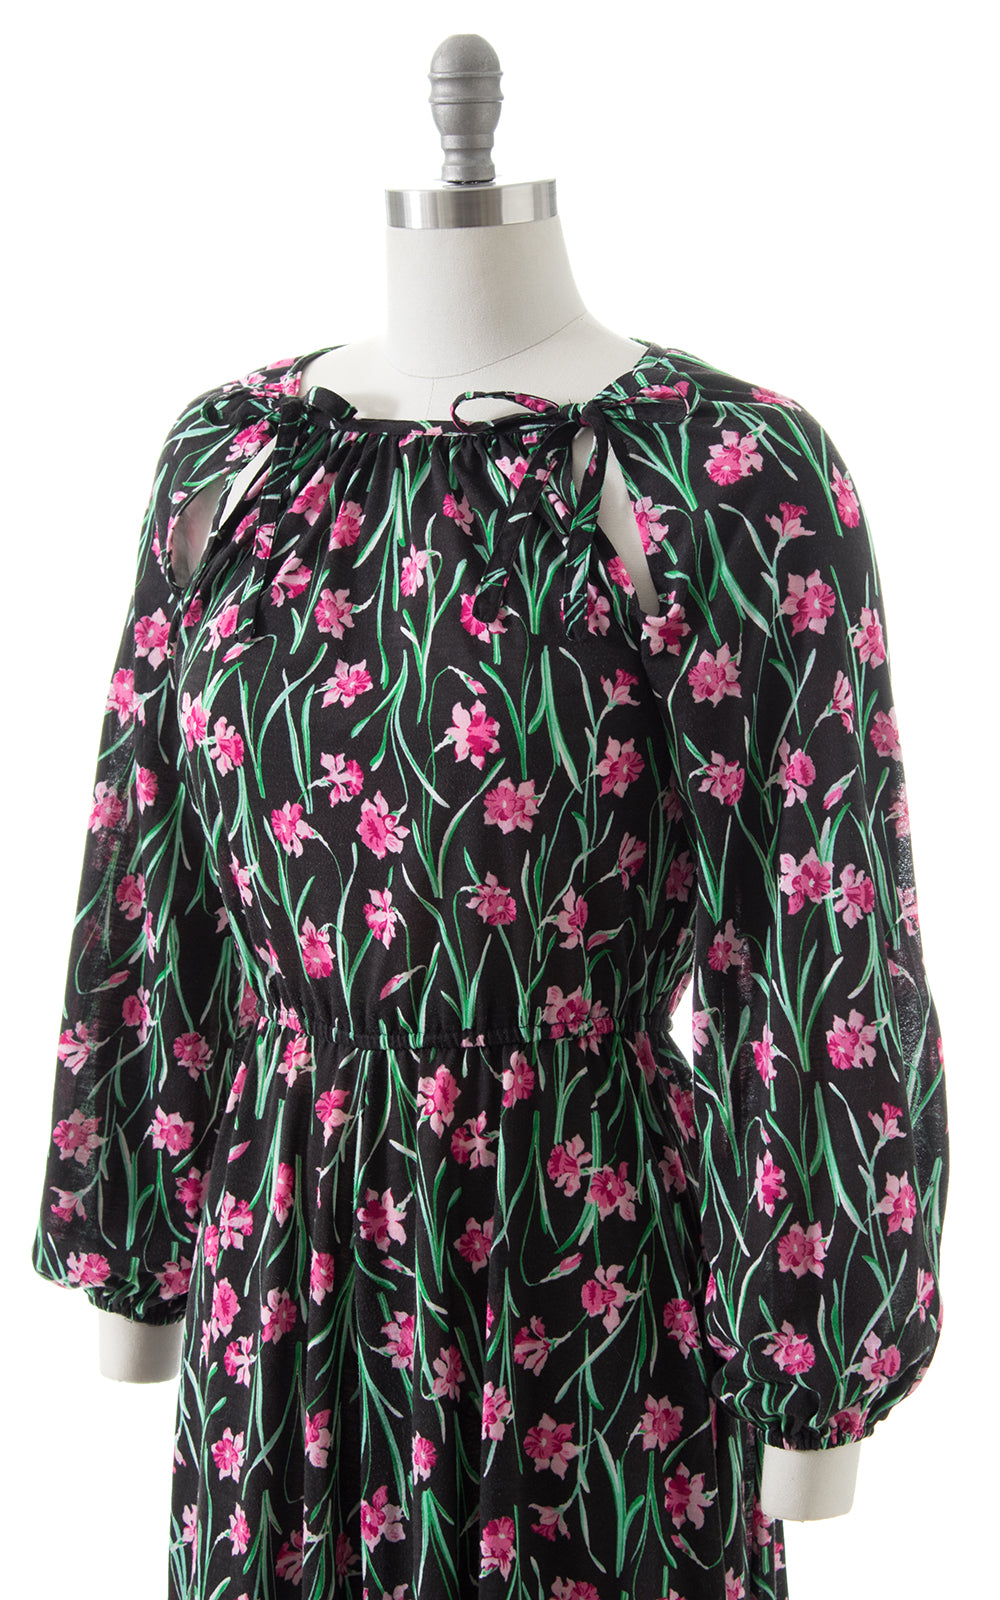 1970s Floral Jersey Dress